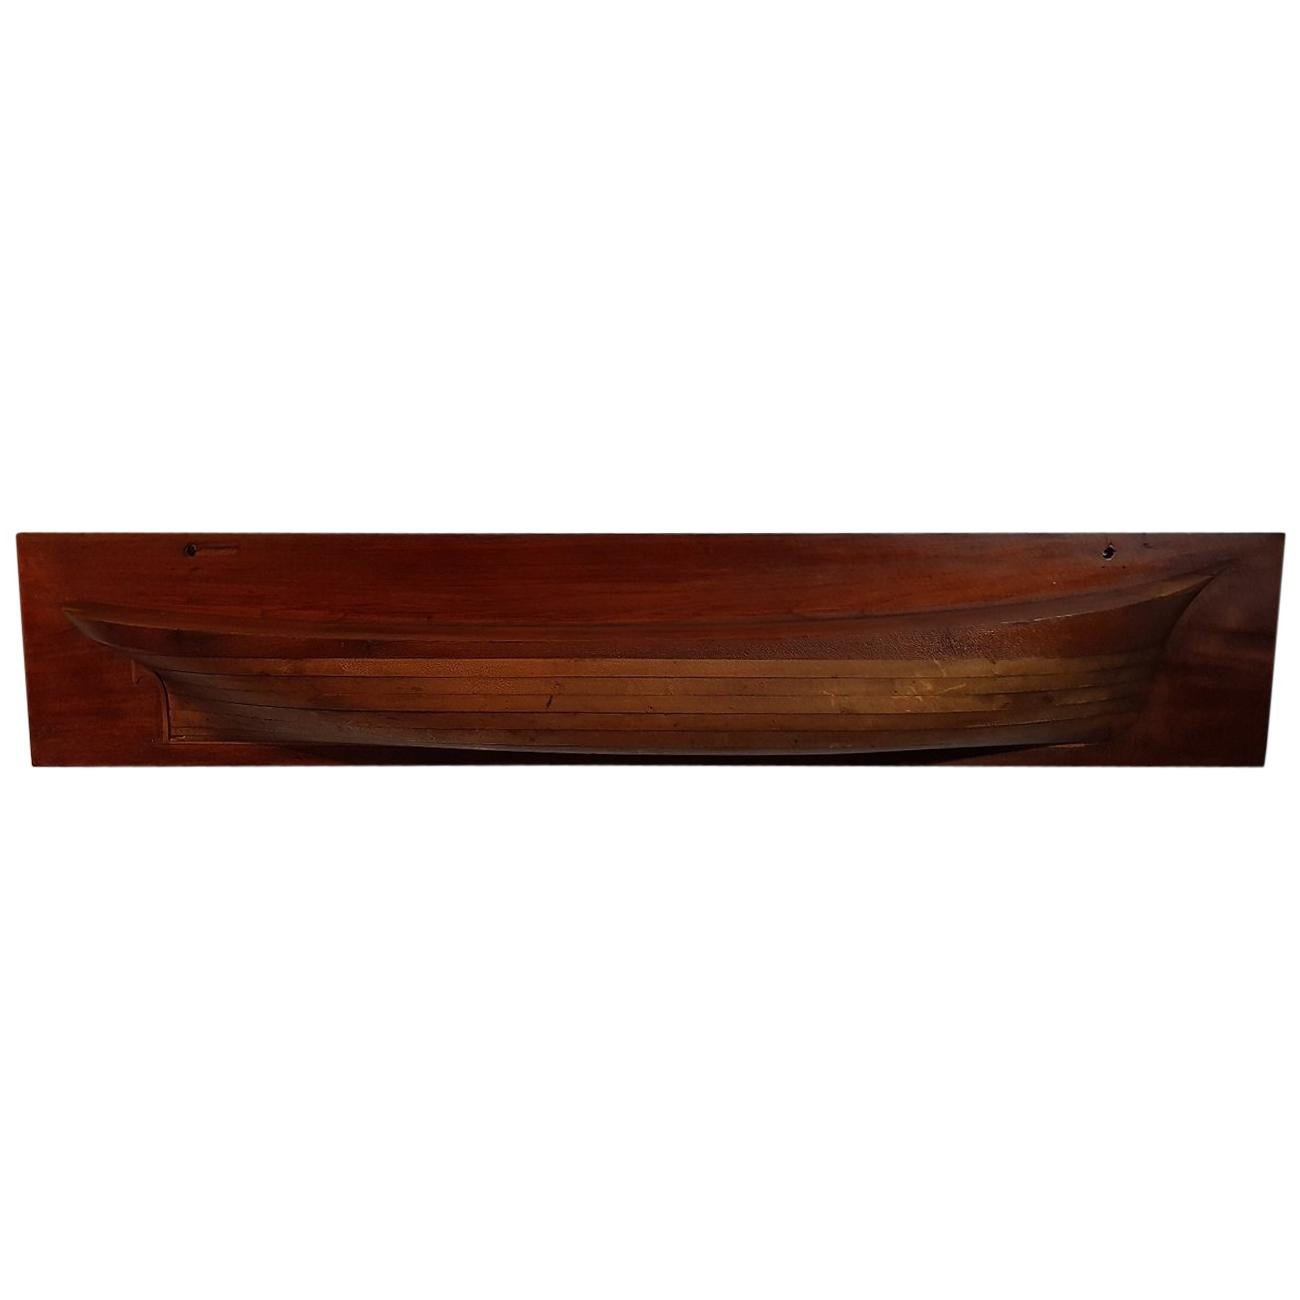 Early 20th Century Handmade Wooden Half Hull Model "Klipper"